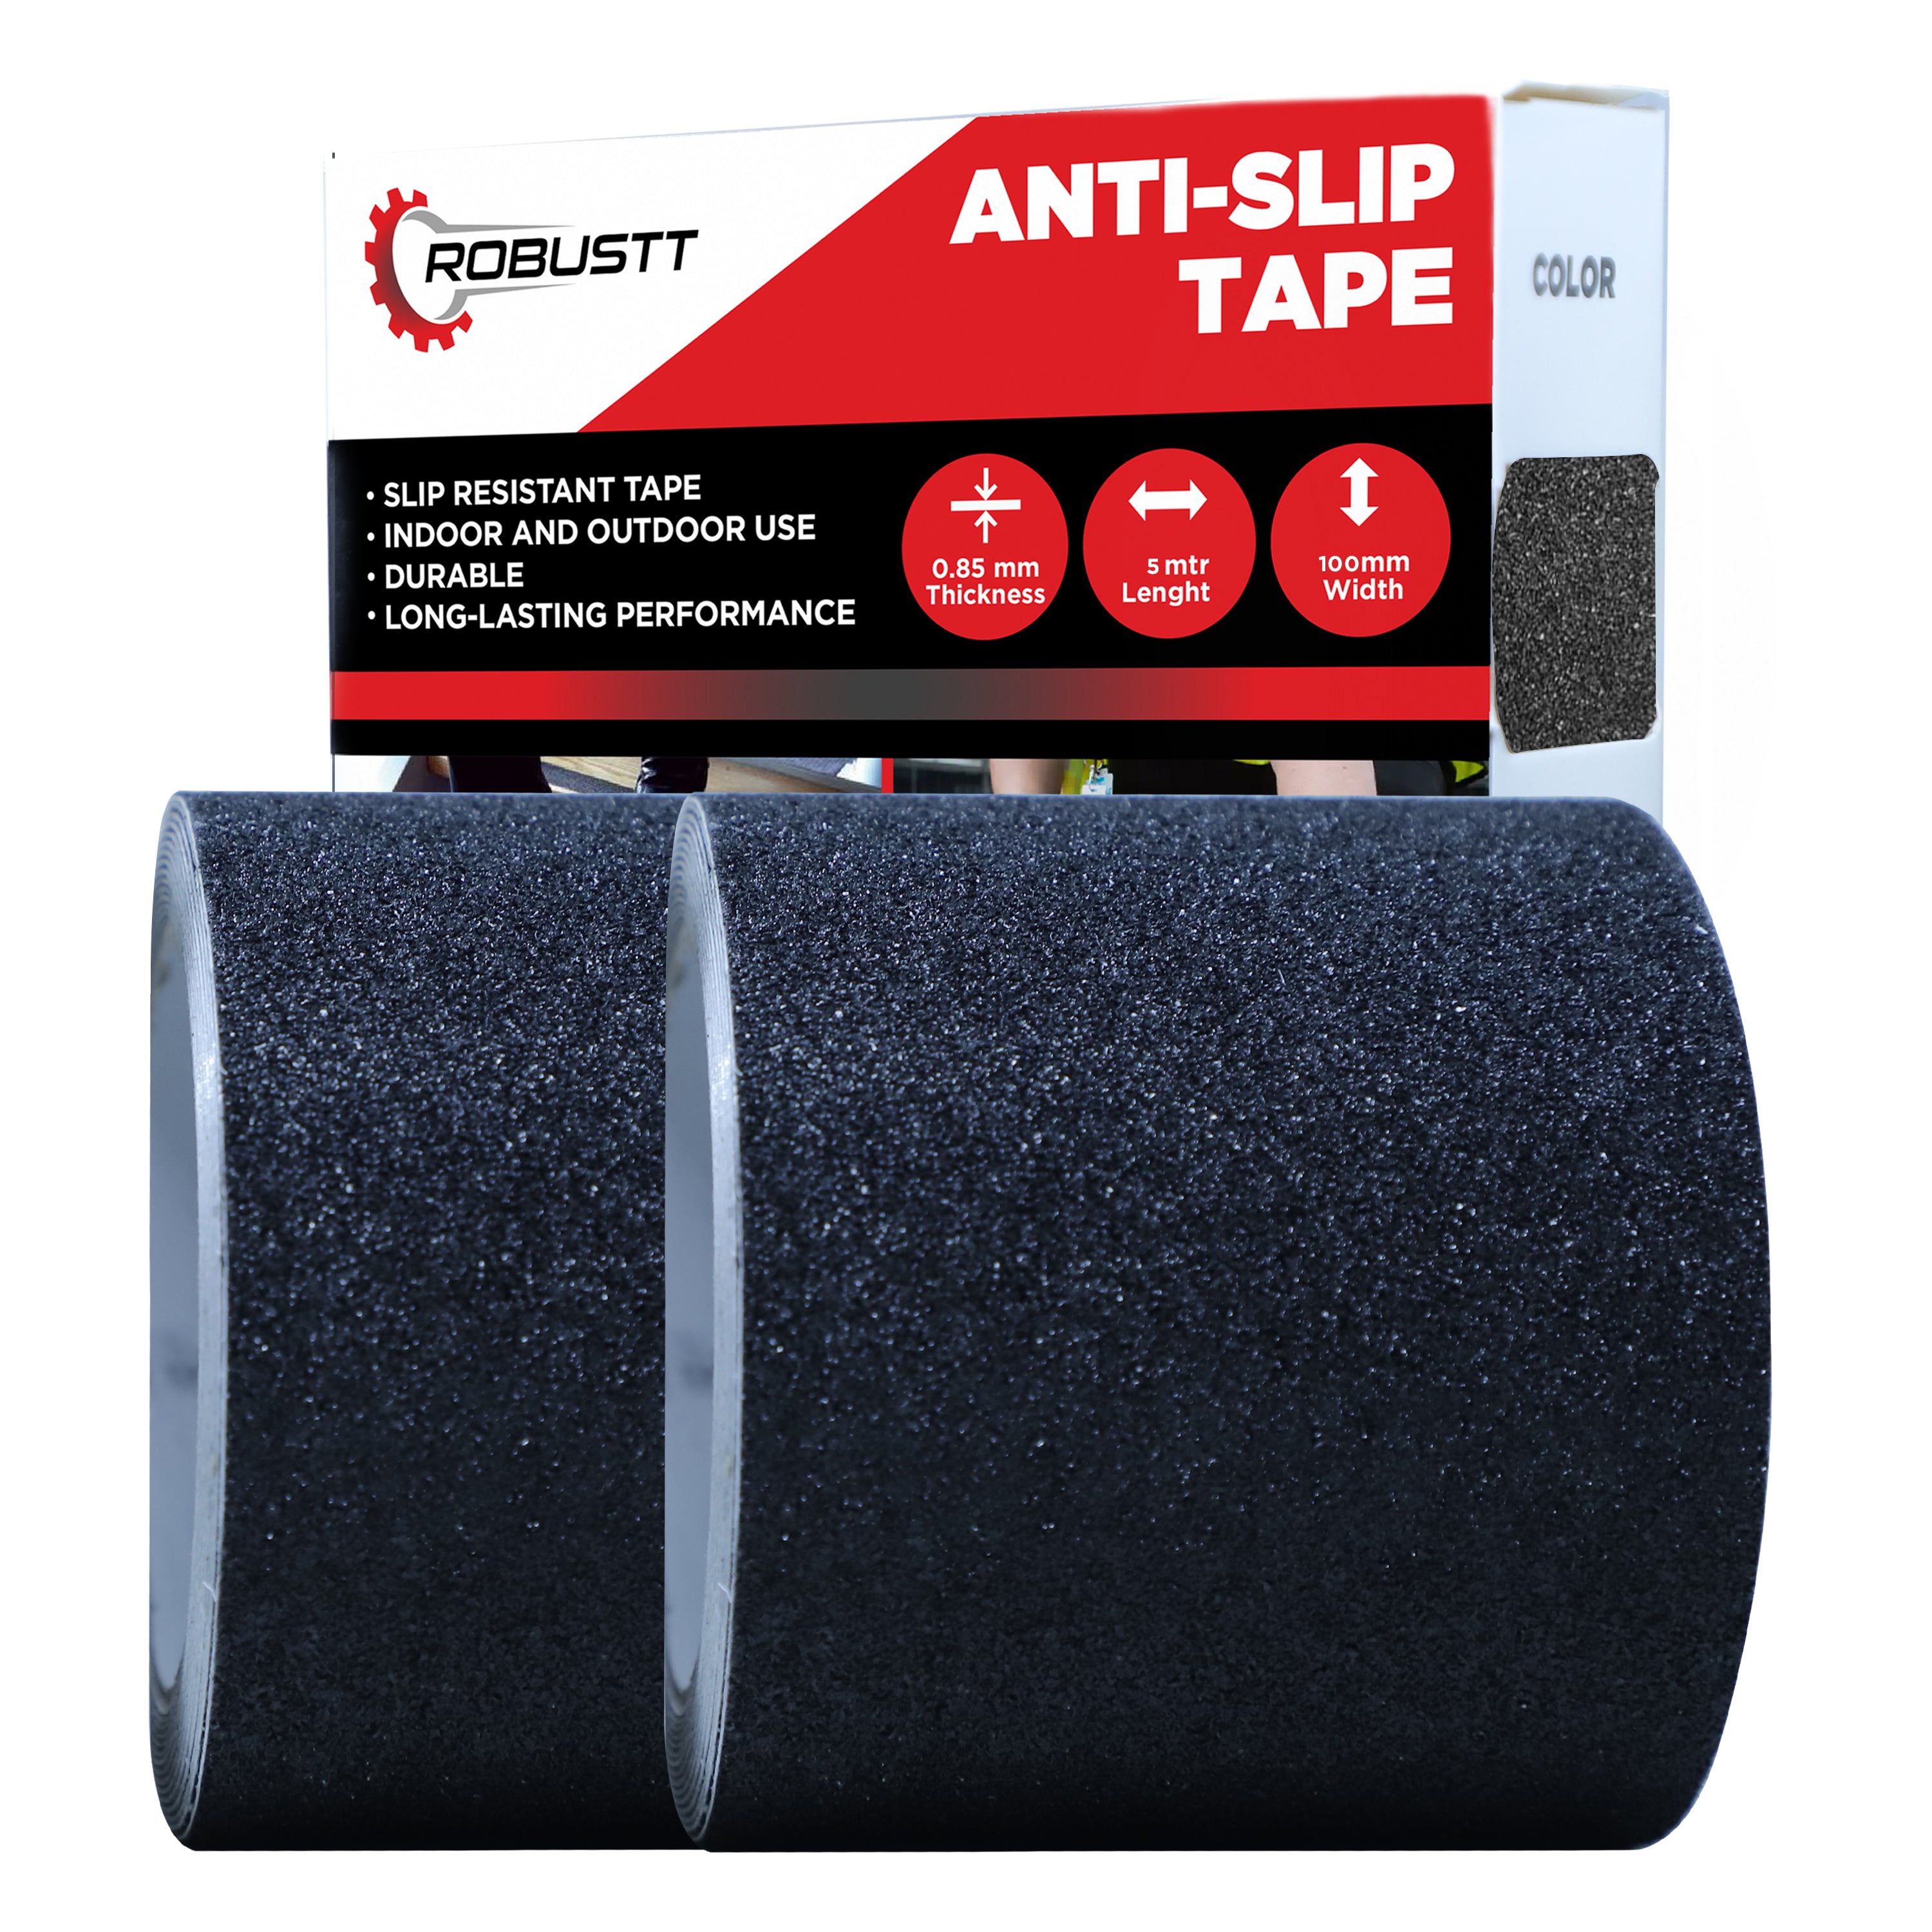 Buy Anti-Slip/ Anti-Skid Black Tape 10 Mtr Guaranteed at Best Price –  Robustt